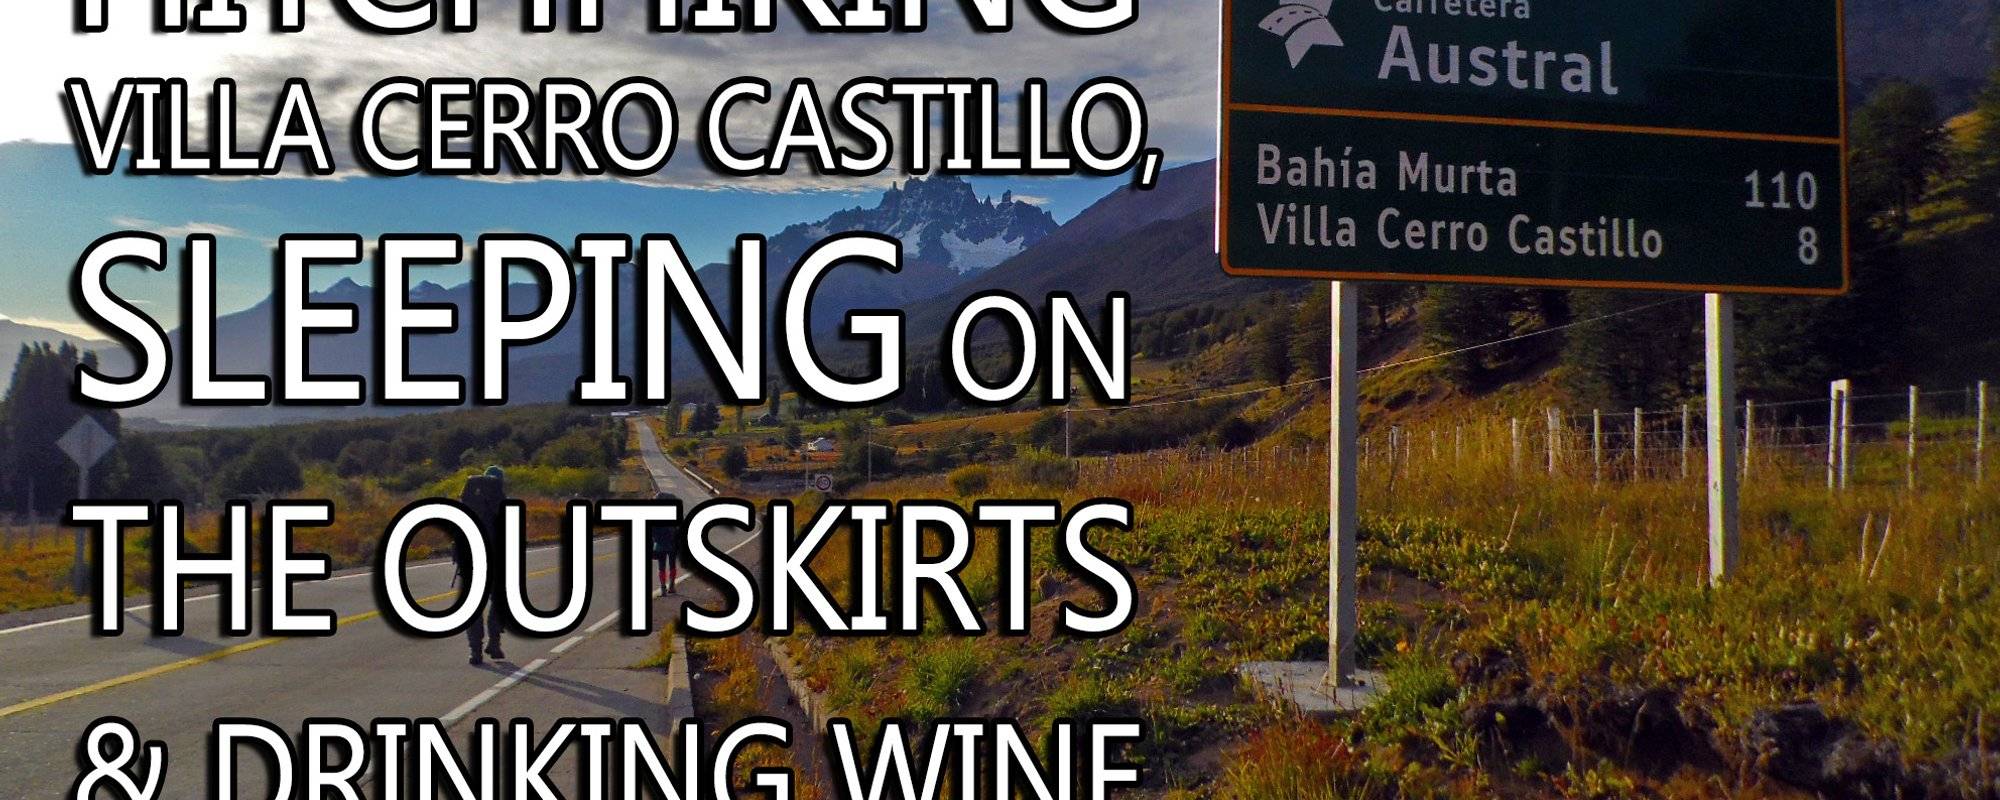 Travel Story: Hitchhiking Villa Cerro Castillo (Part I)